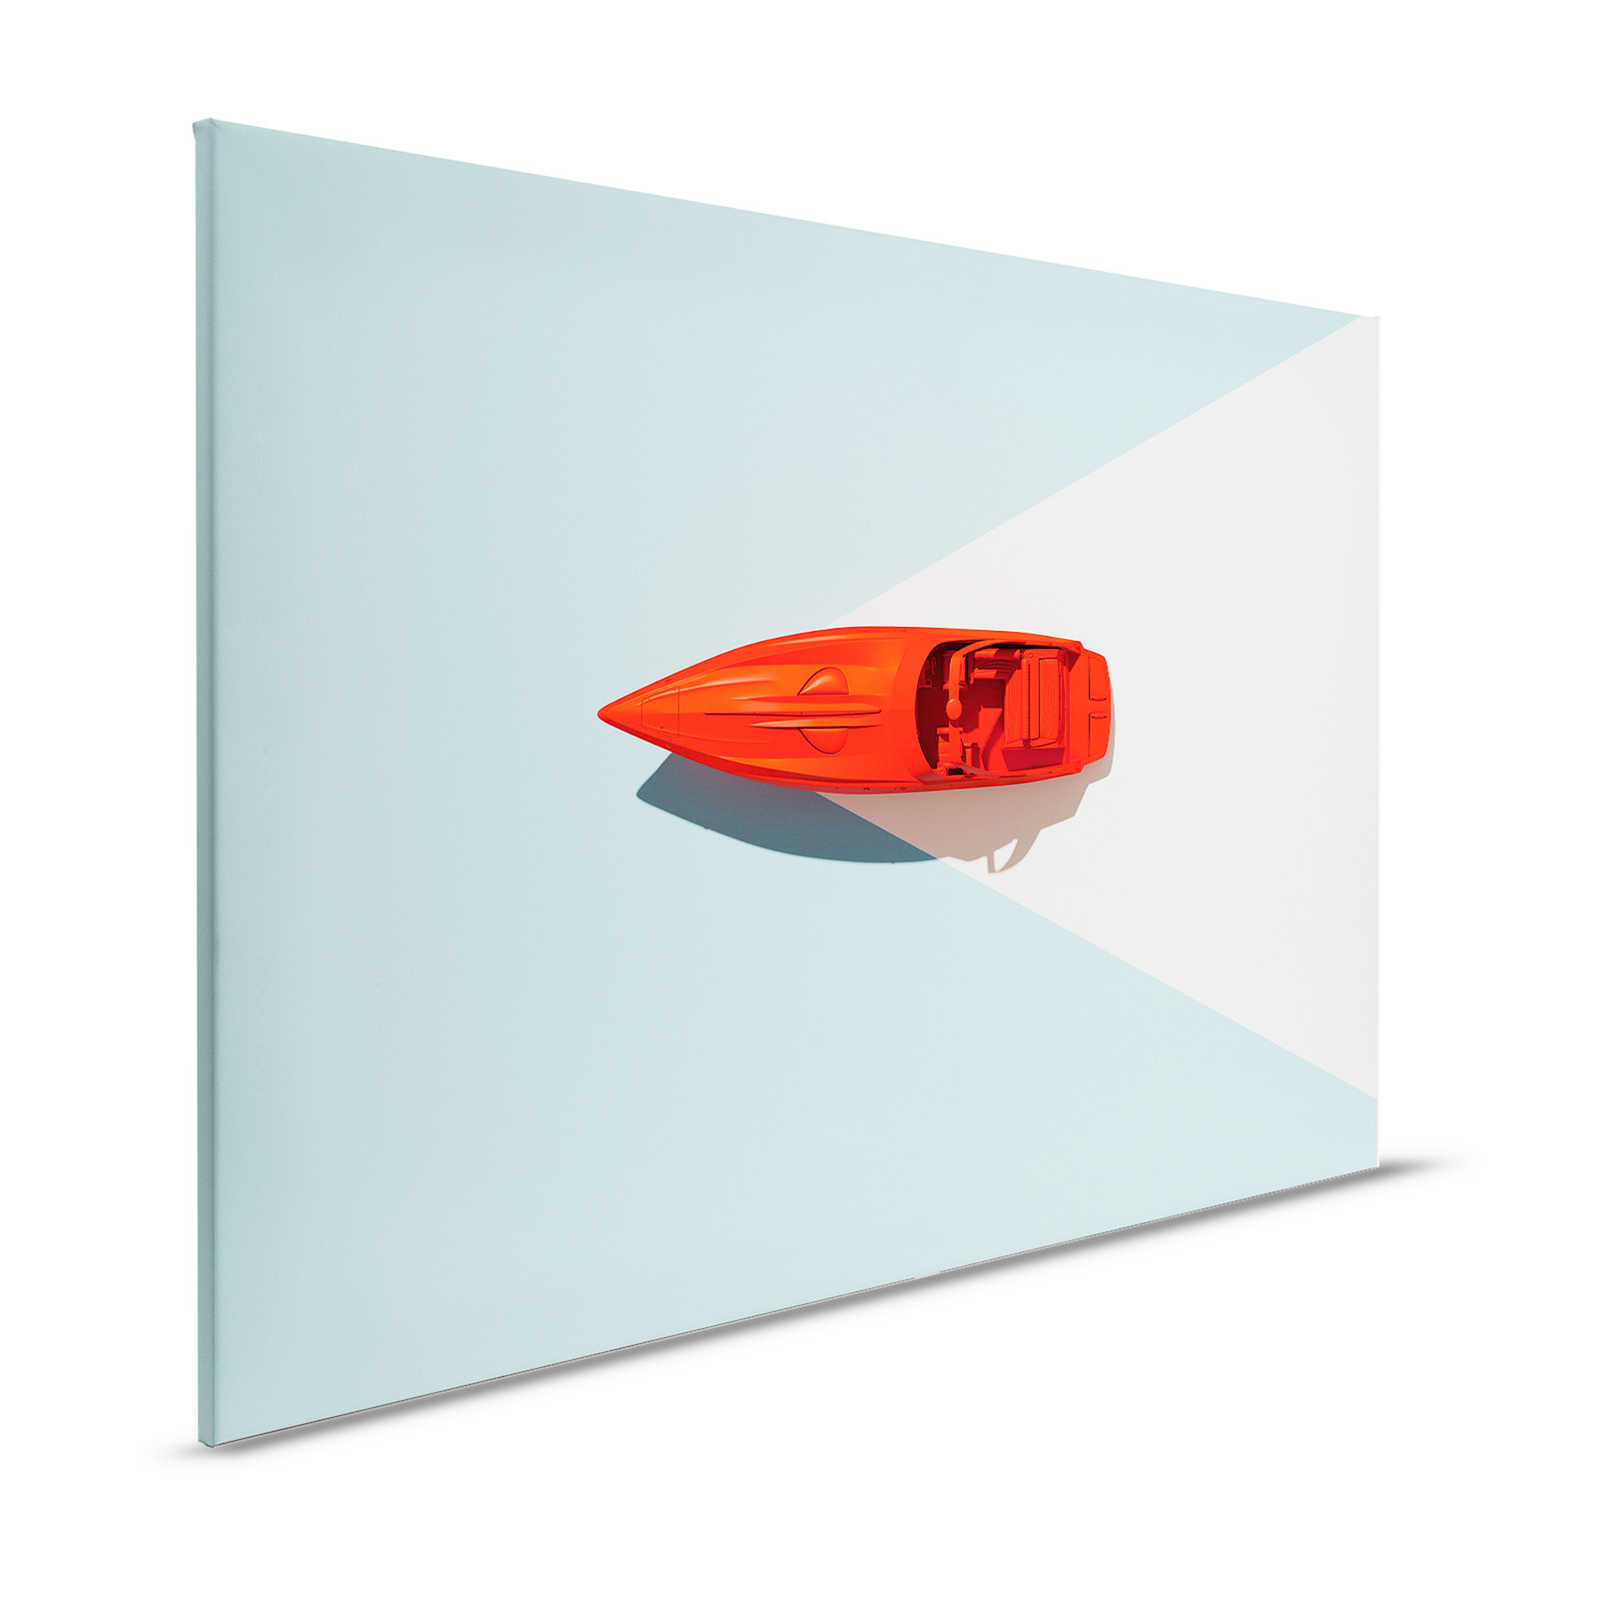 Key West 1 - Quadro su tela per barca Design minimalista - 1,20 m x 0,80 m
